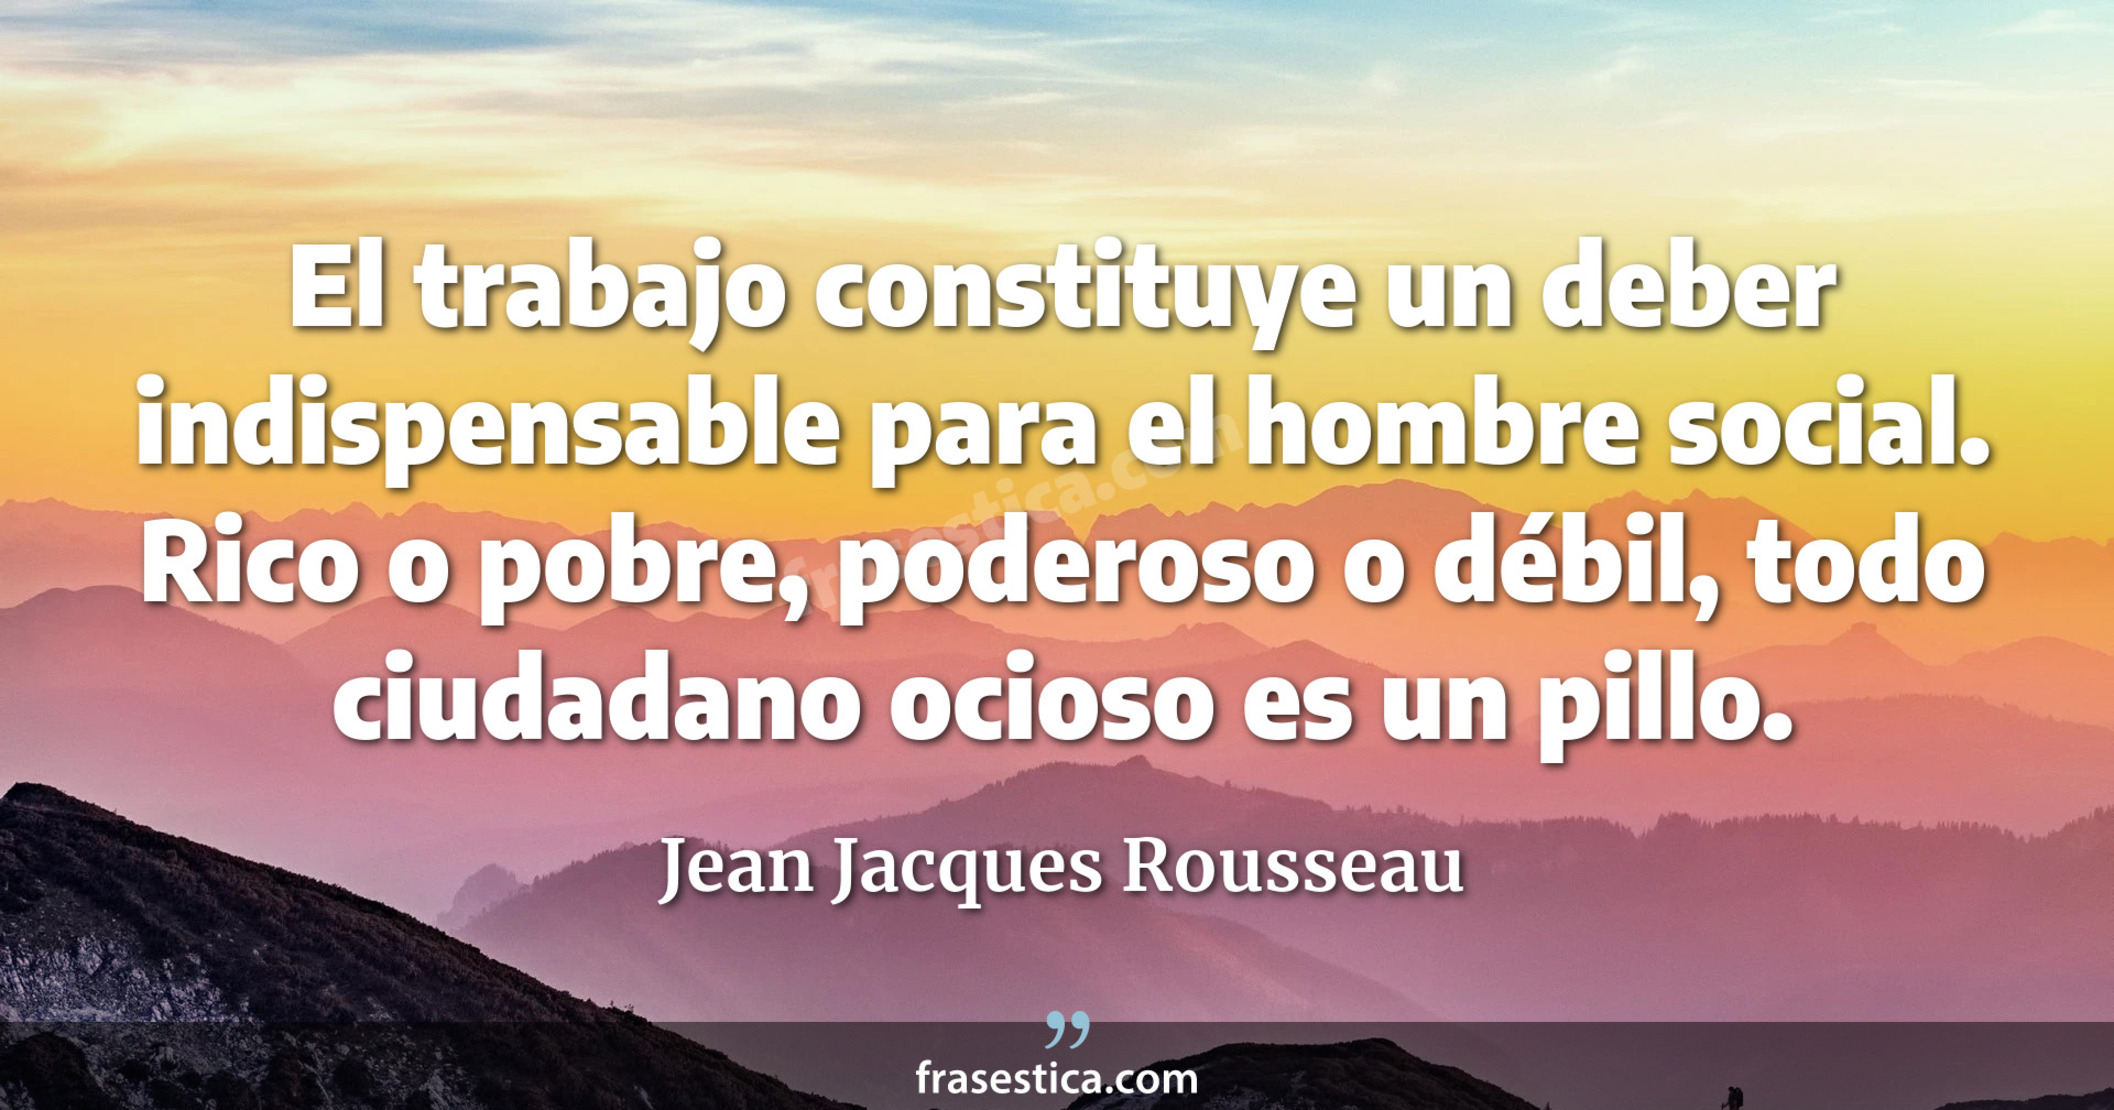 El trabajo constituye un deber indispensable para el hombre social. Rico o pobre, poderoso o débil, todo ciudadano ocioso es un pillo. - Jean Jacques Rousseau